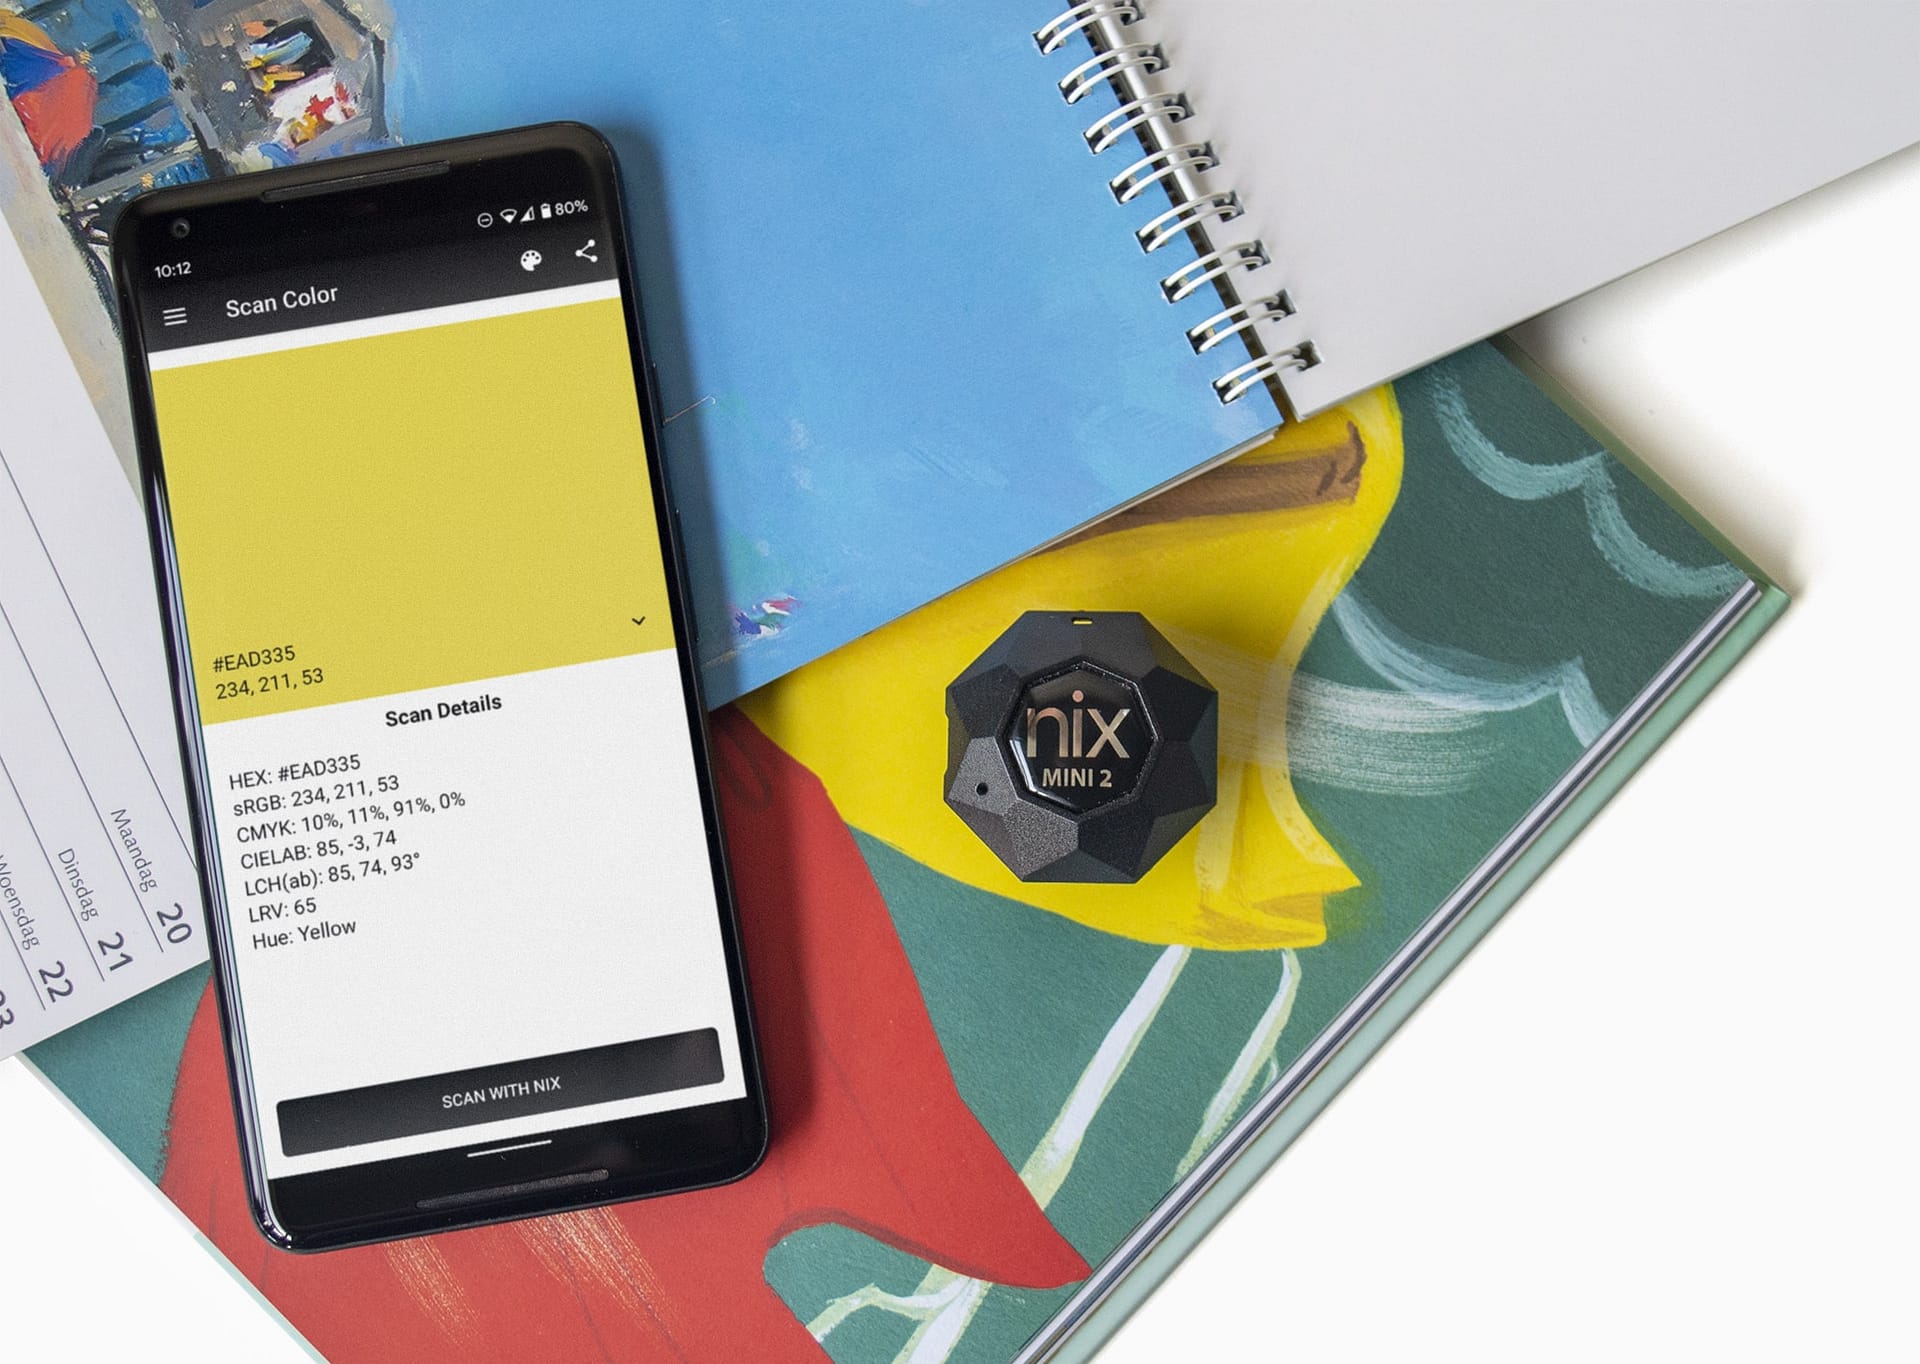 Nix Mini 2 Color Sensor with notebooks